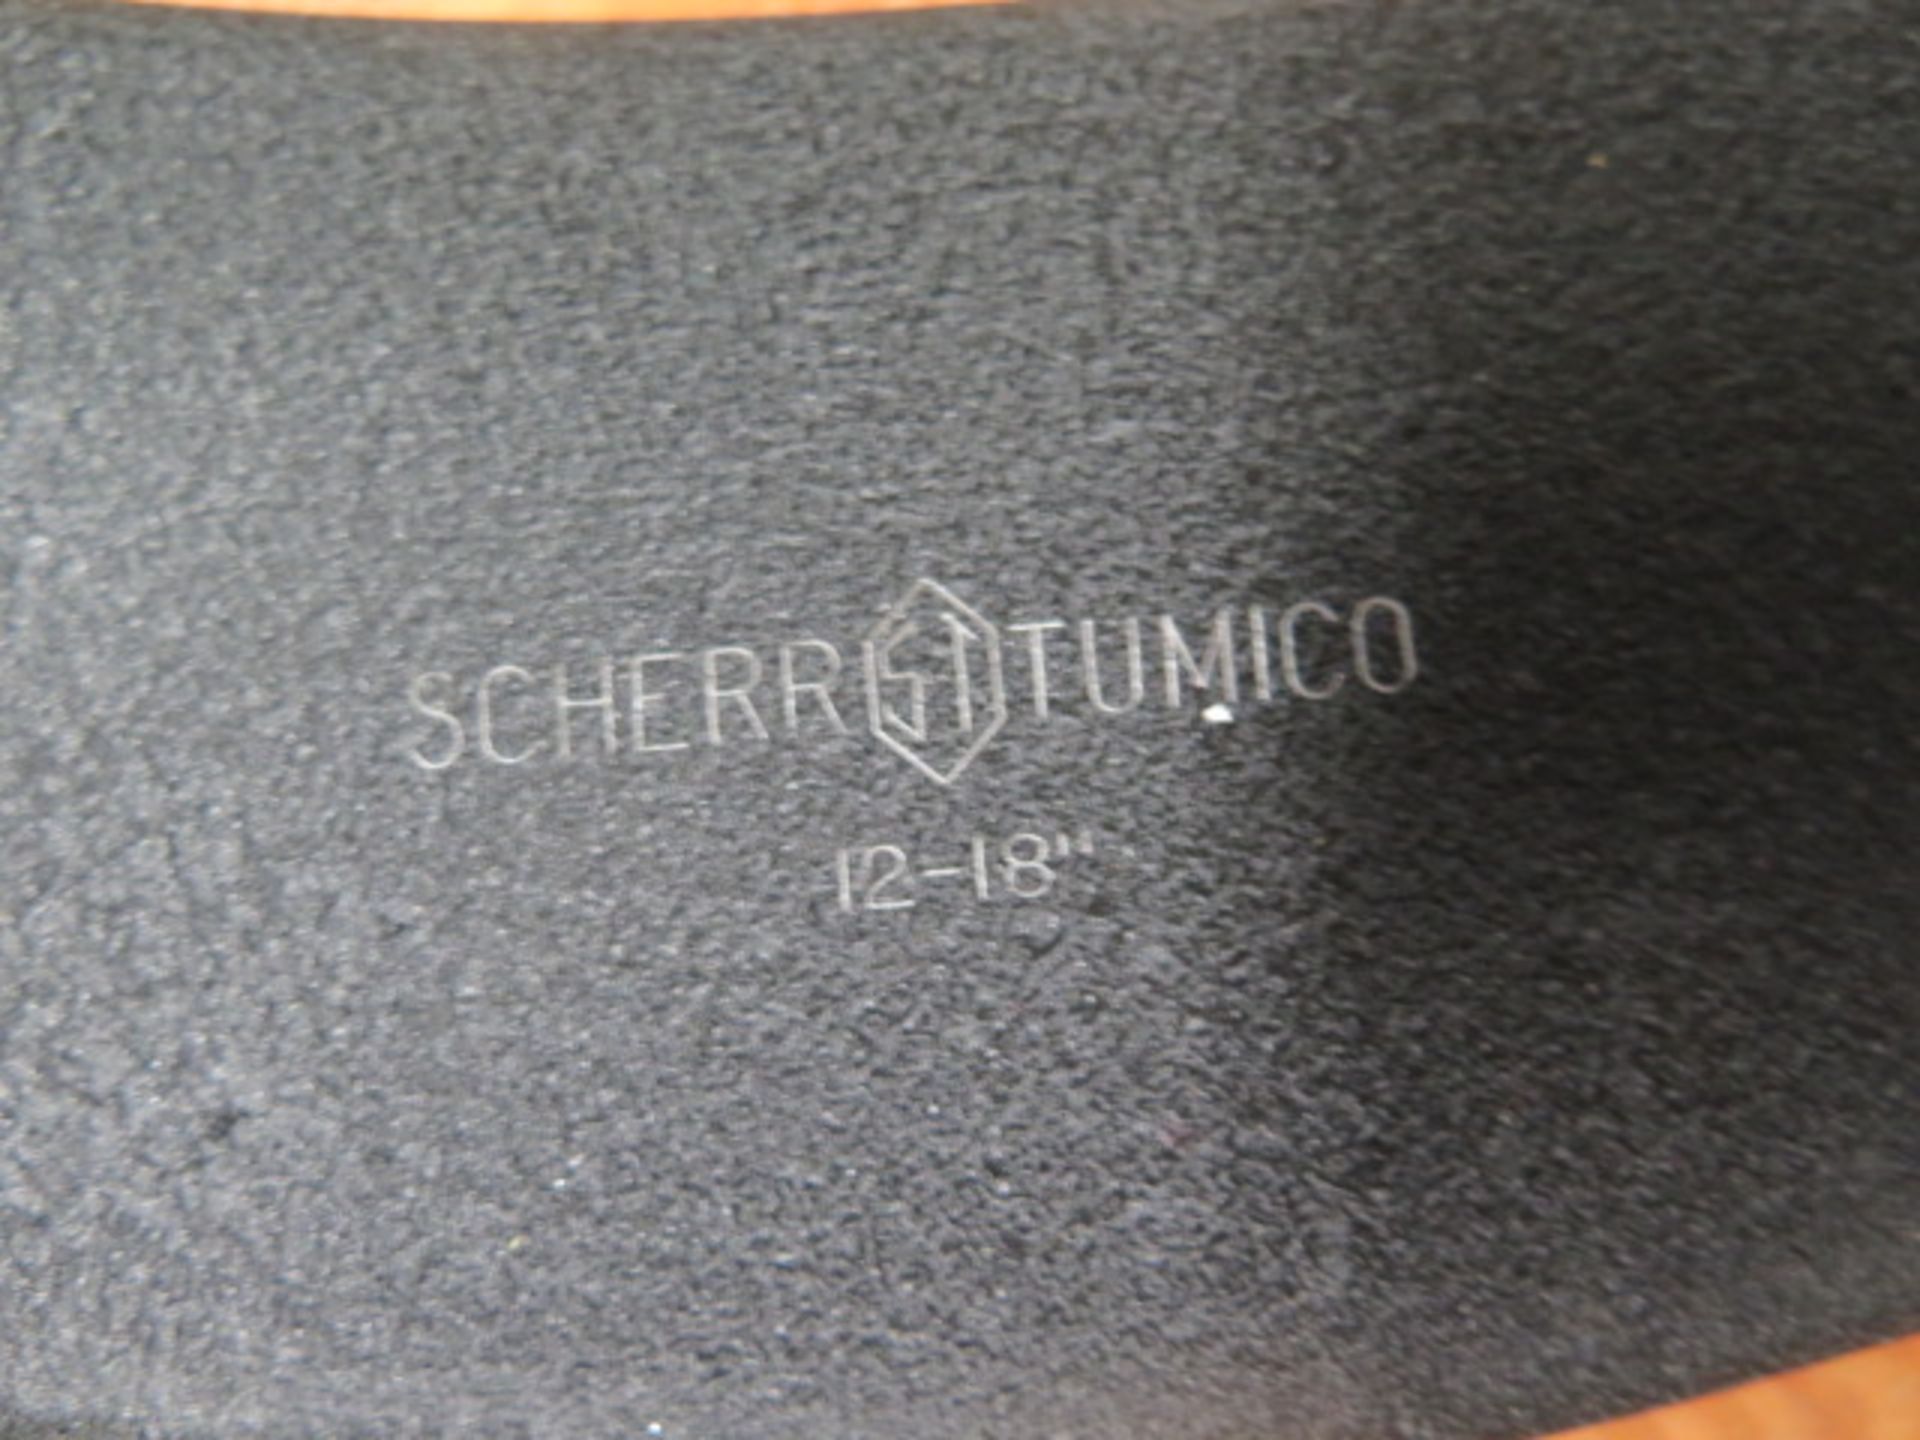 Scherr Tumico 12”-18” OD Mic (SOLD AS-IS - NO WARRANTY) - Image 7 of 7